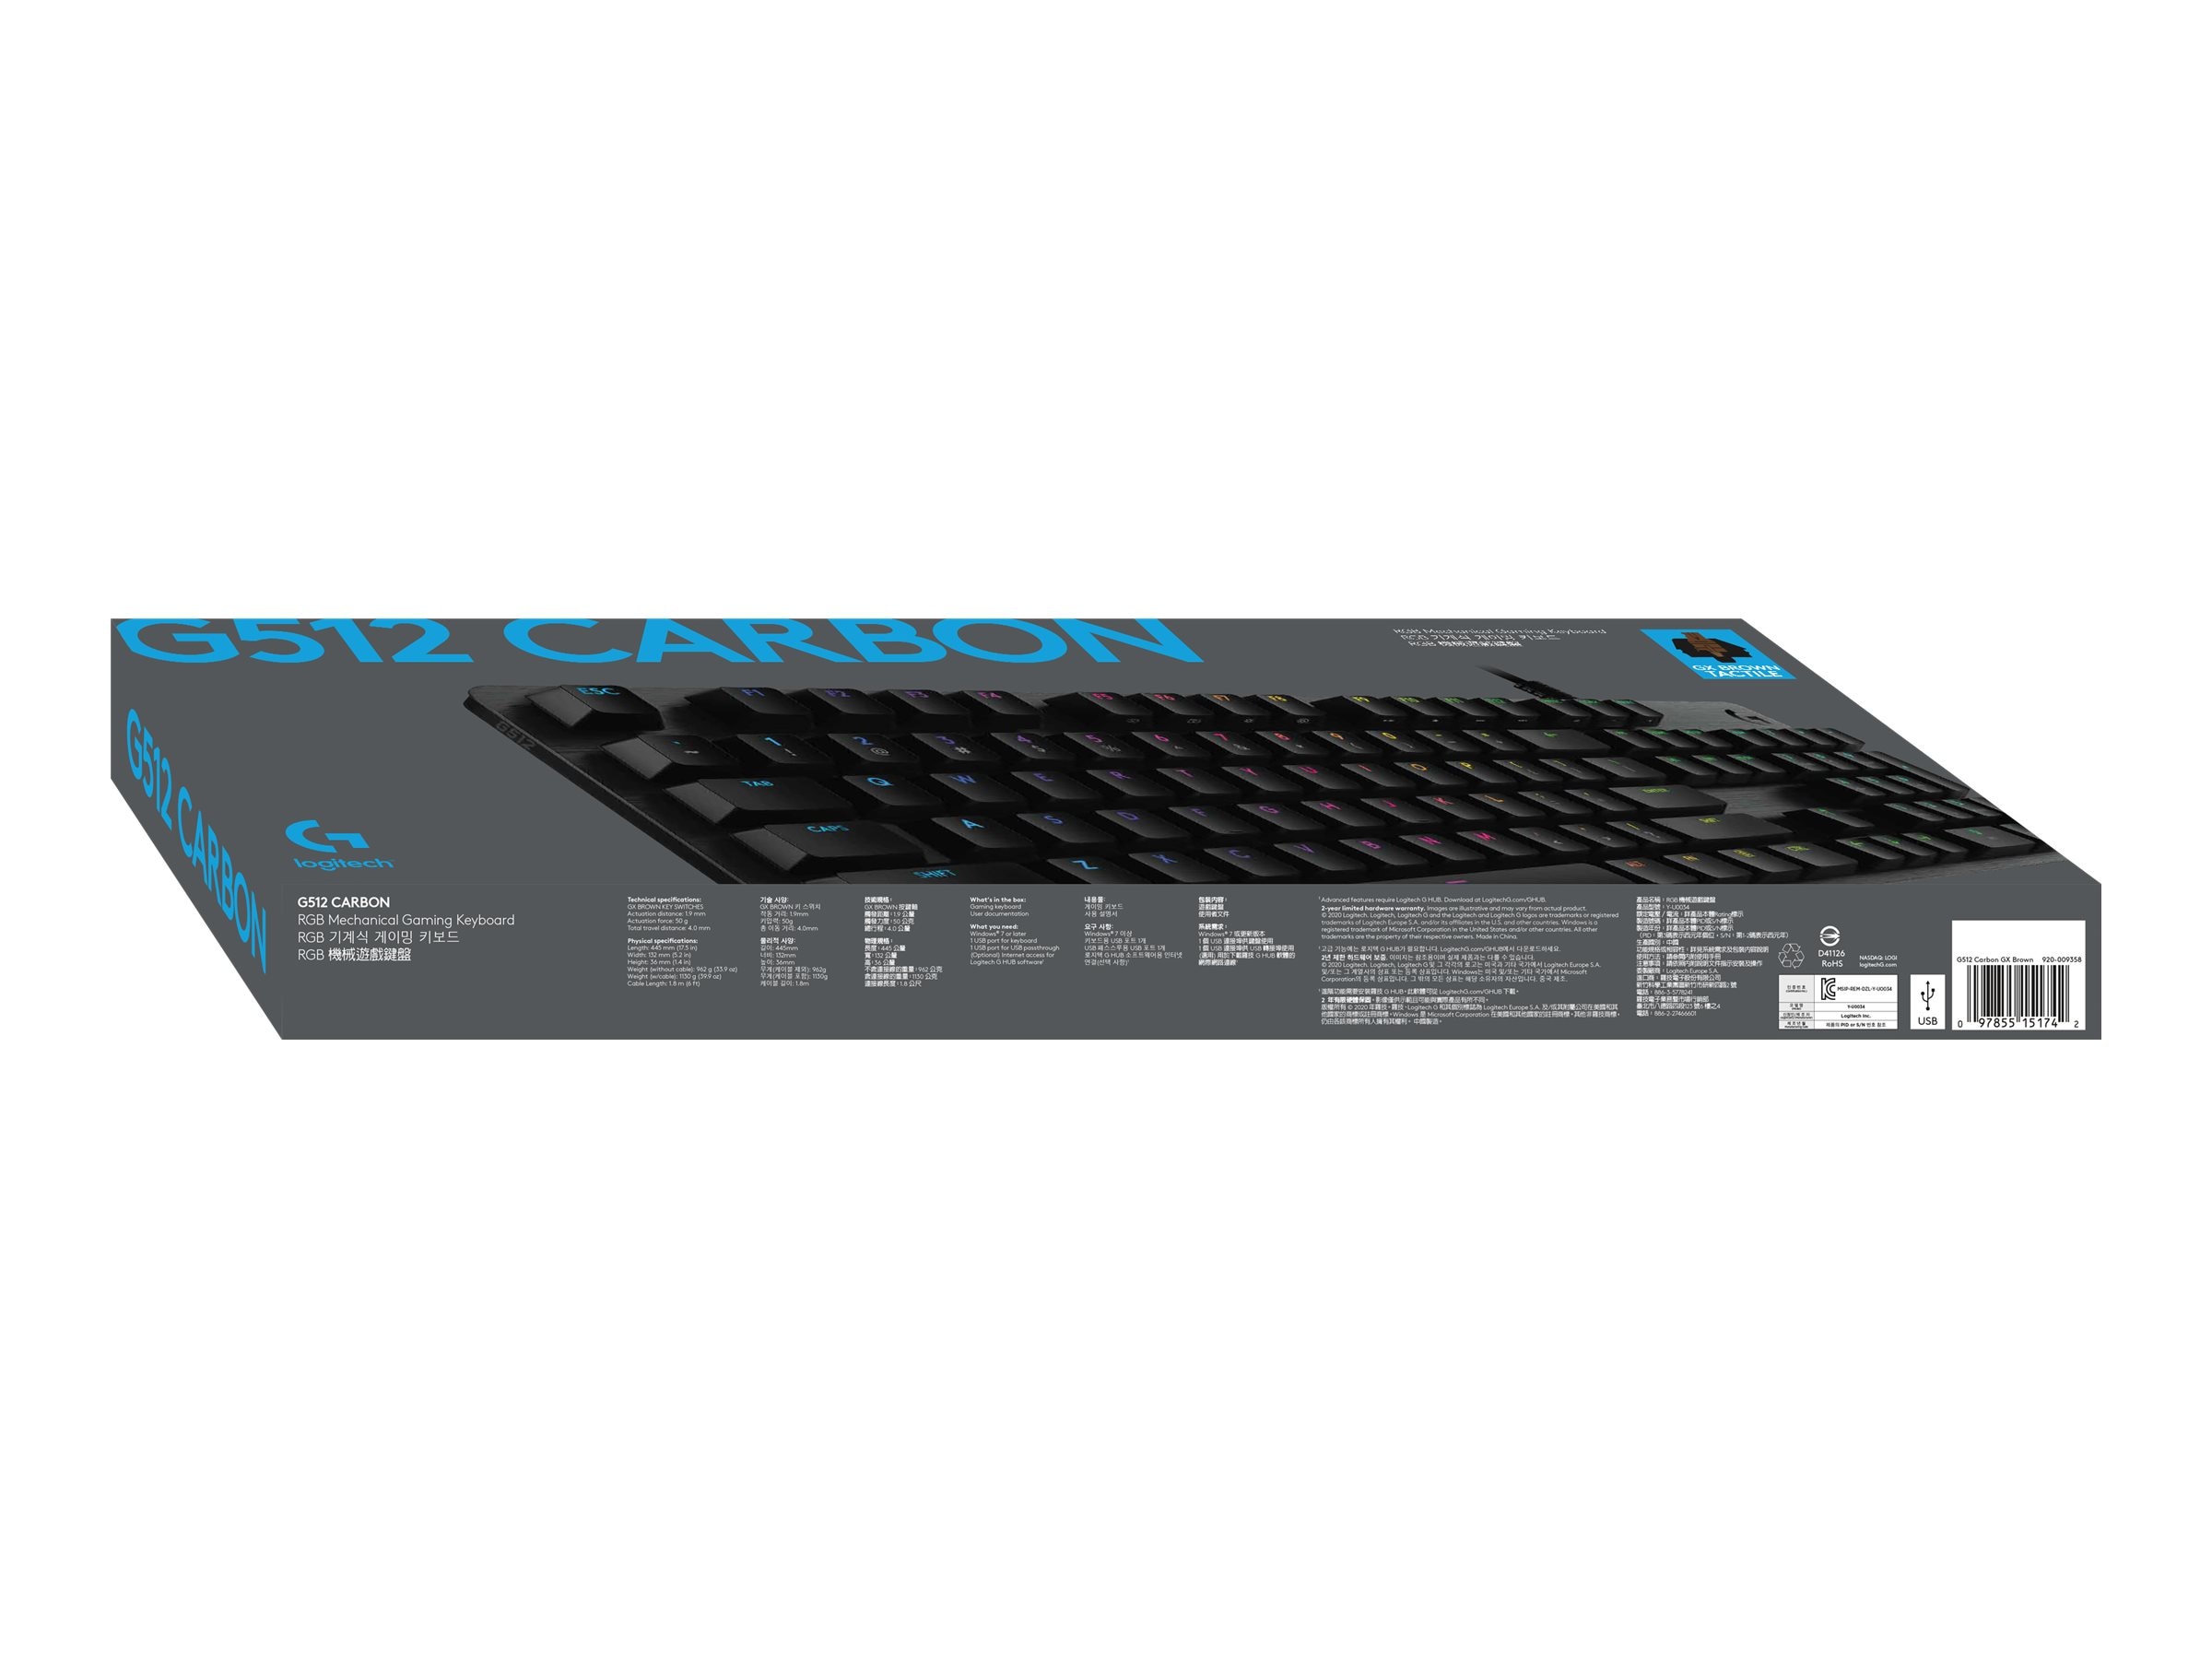 Logitech G512 Carbon Light Sync RGB Mechanical Gaming Keyboard